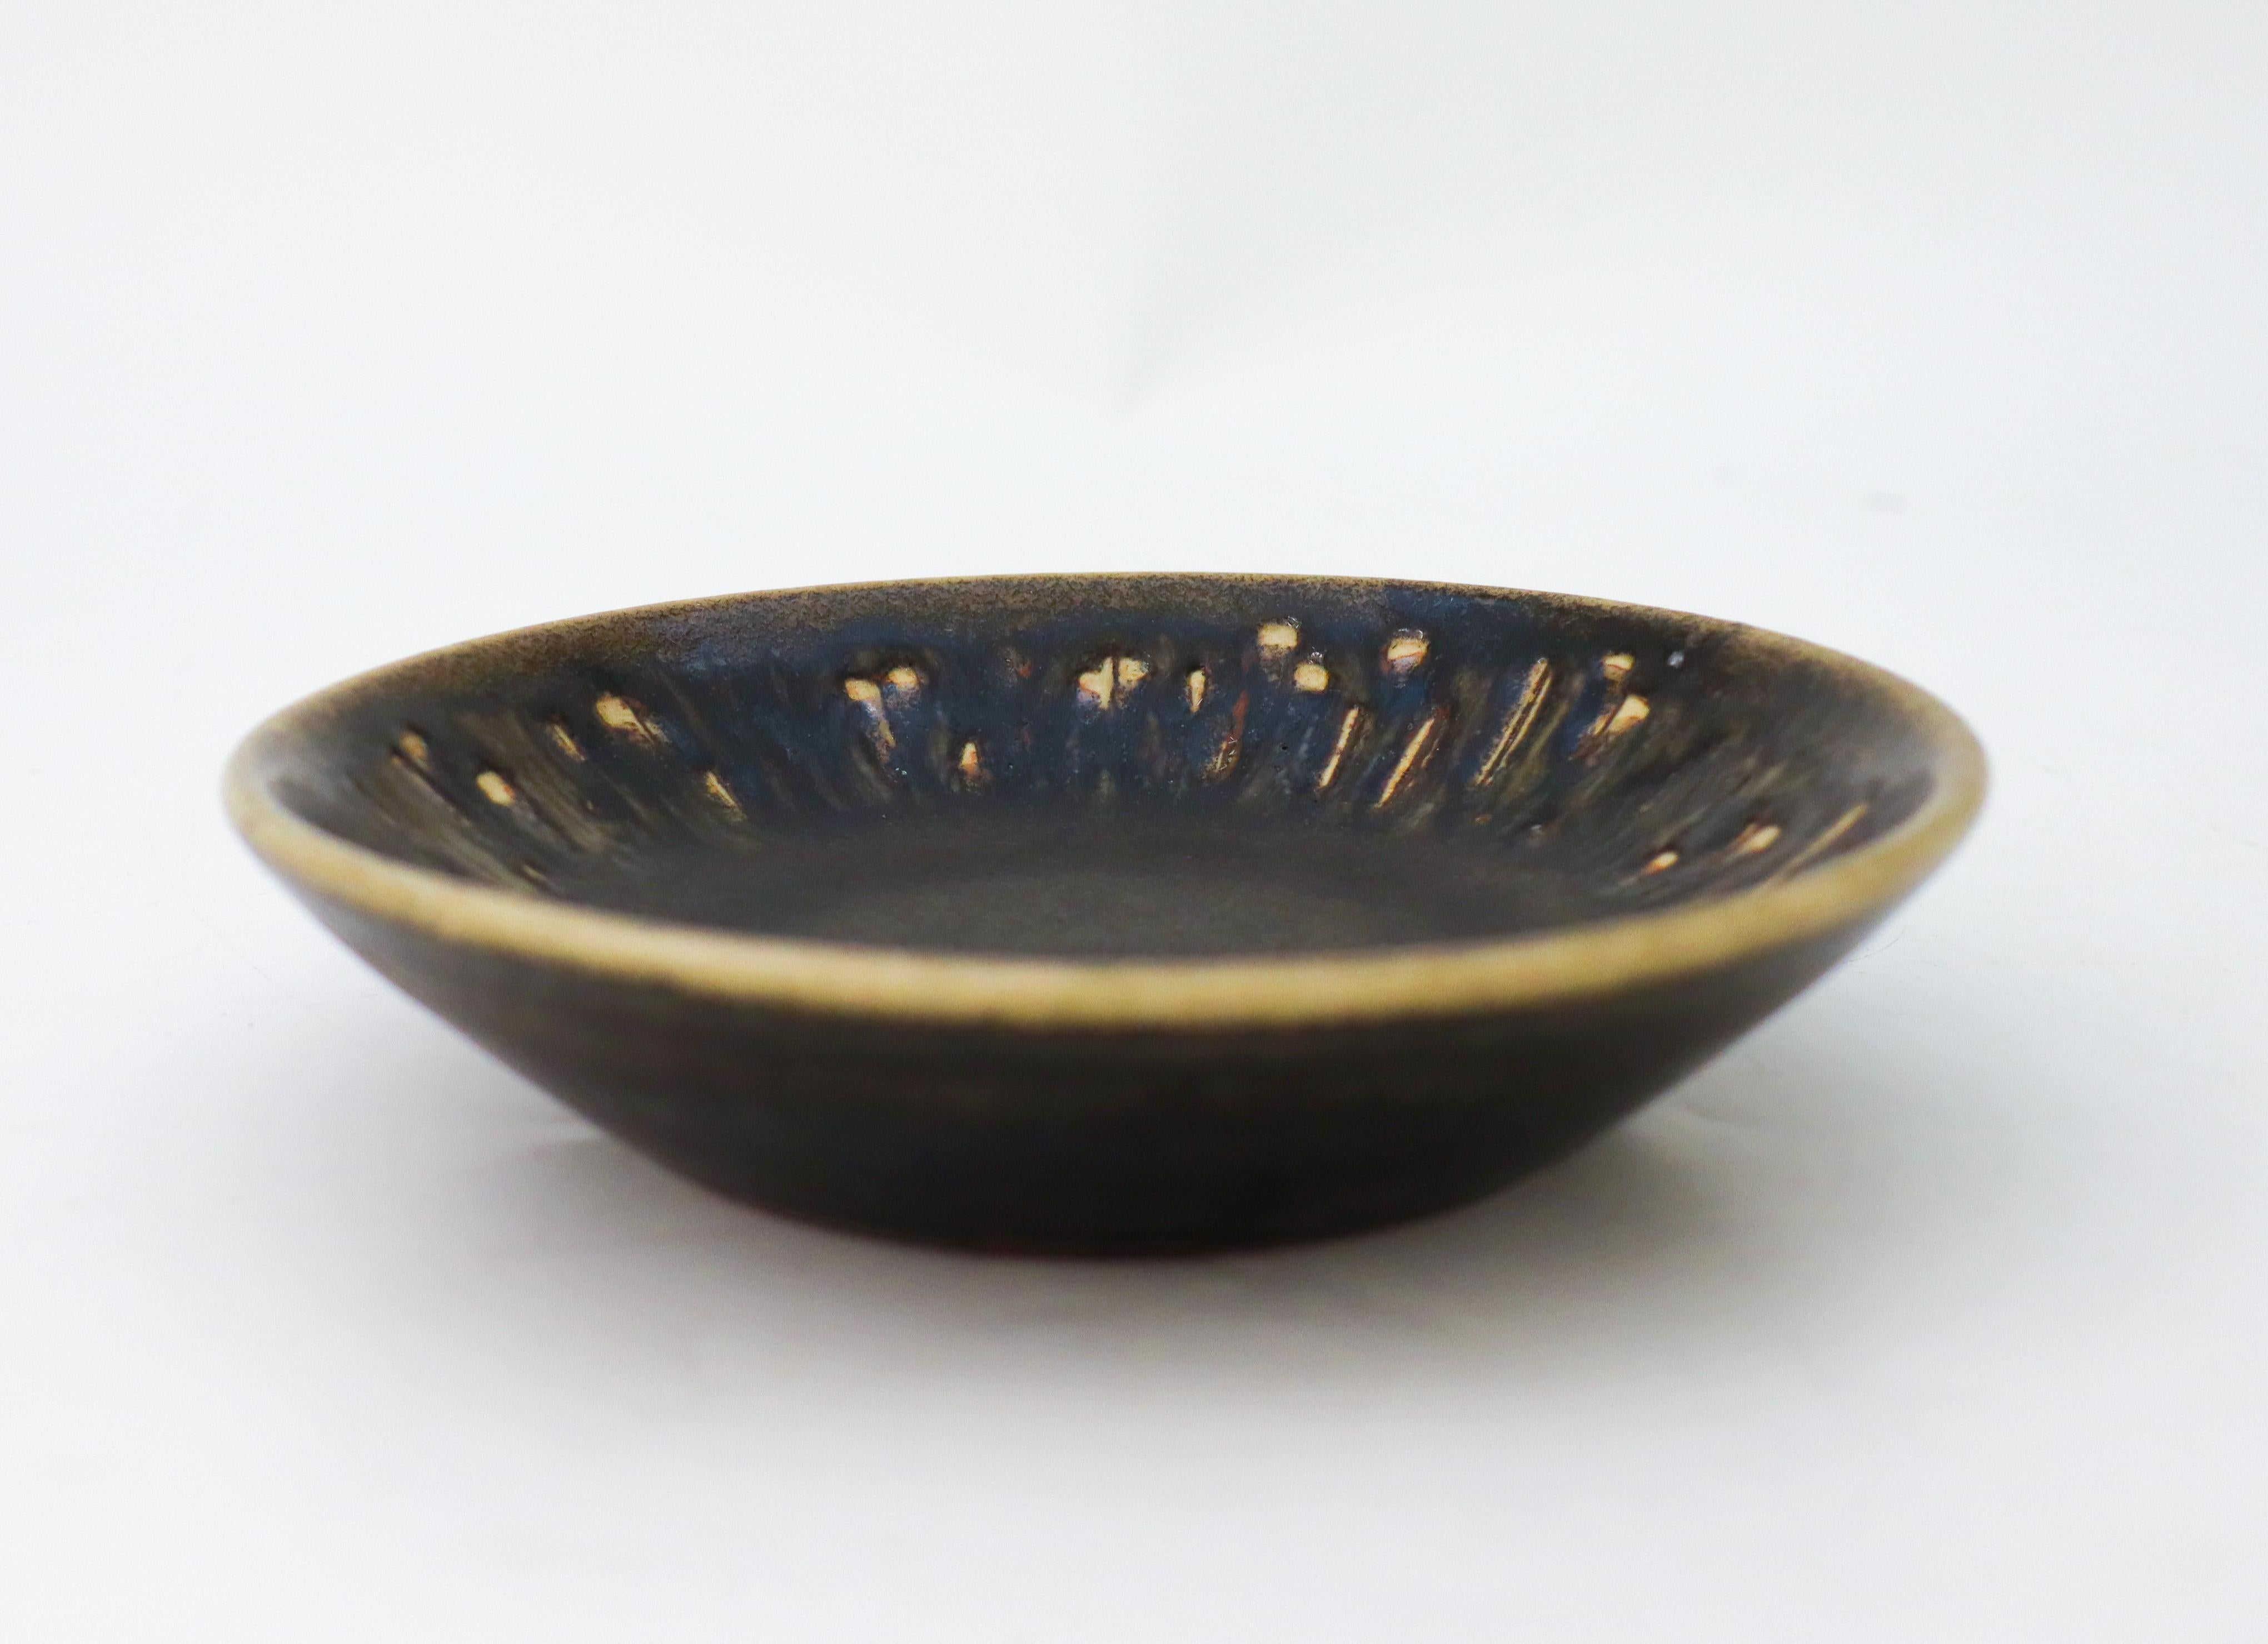 A round, black ceramic bowl designed by Carl-Harry Stålhane at Rörstrand, the bowl is 15,5 cm (6,2